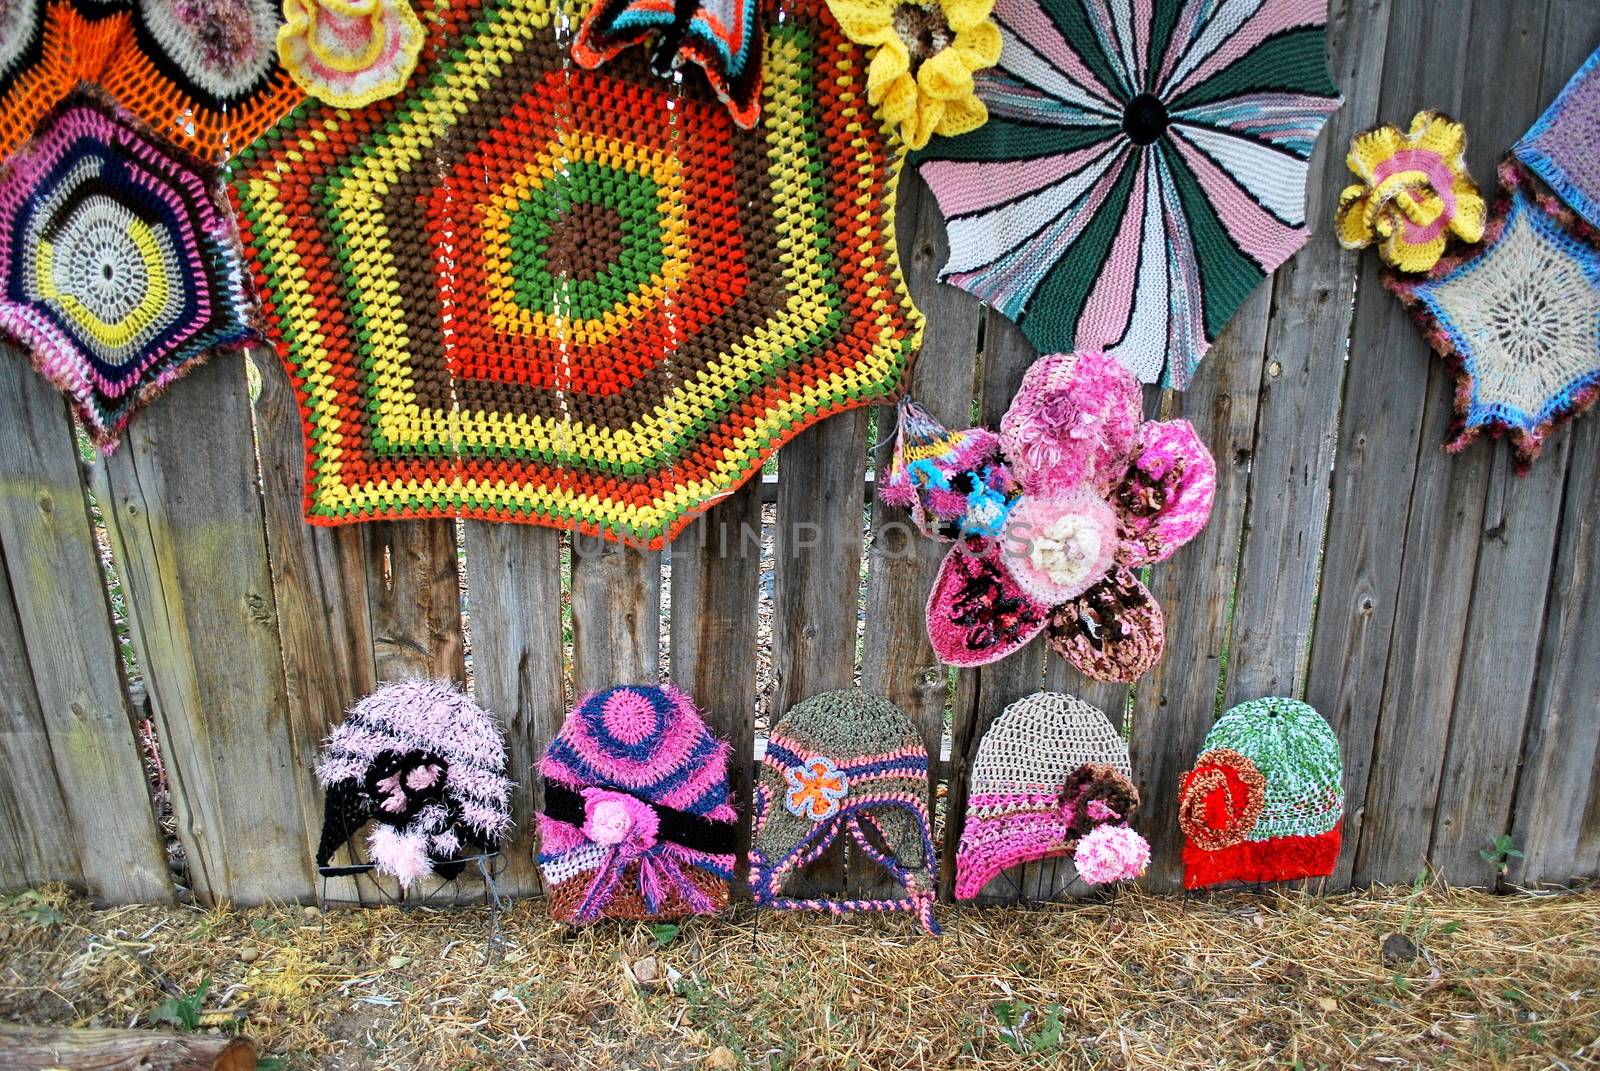 Crochet designs displayed outdoors.